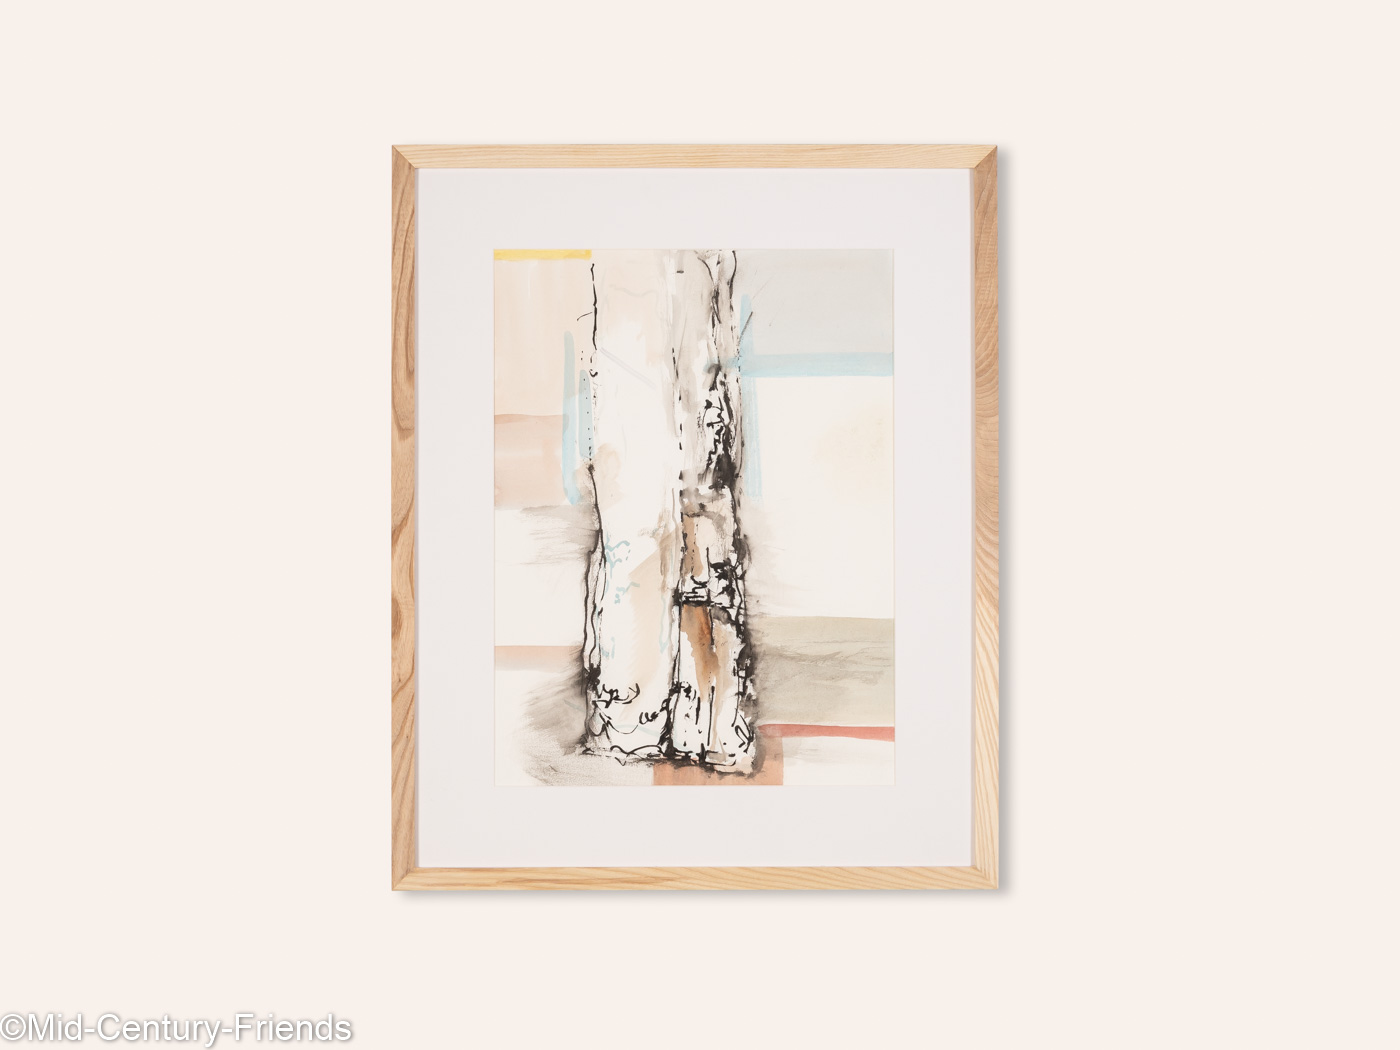 Die Birke, Aquarell auf Papier, 53 x 65 cm